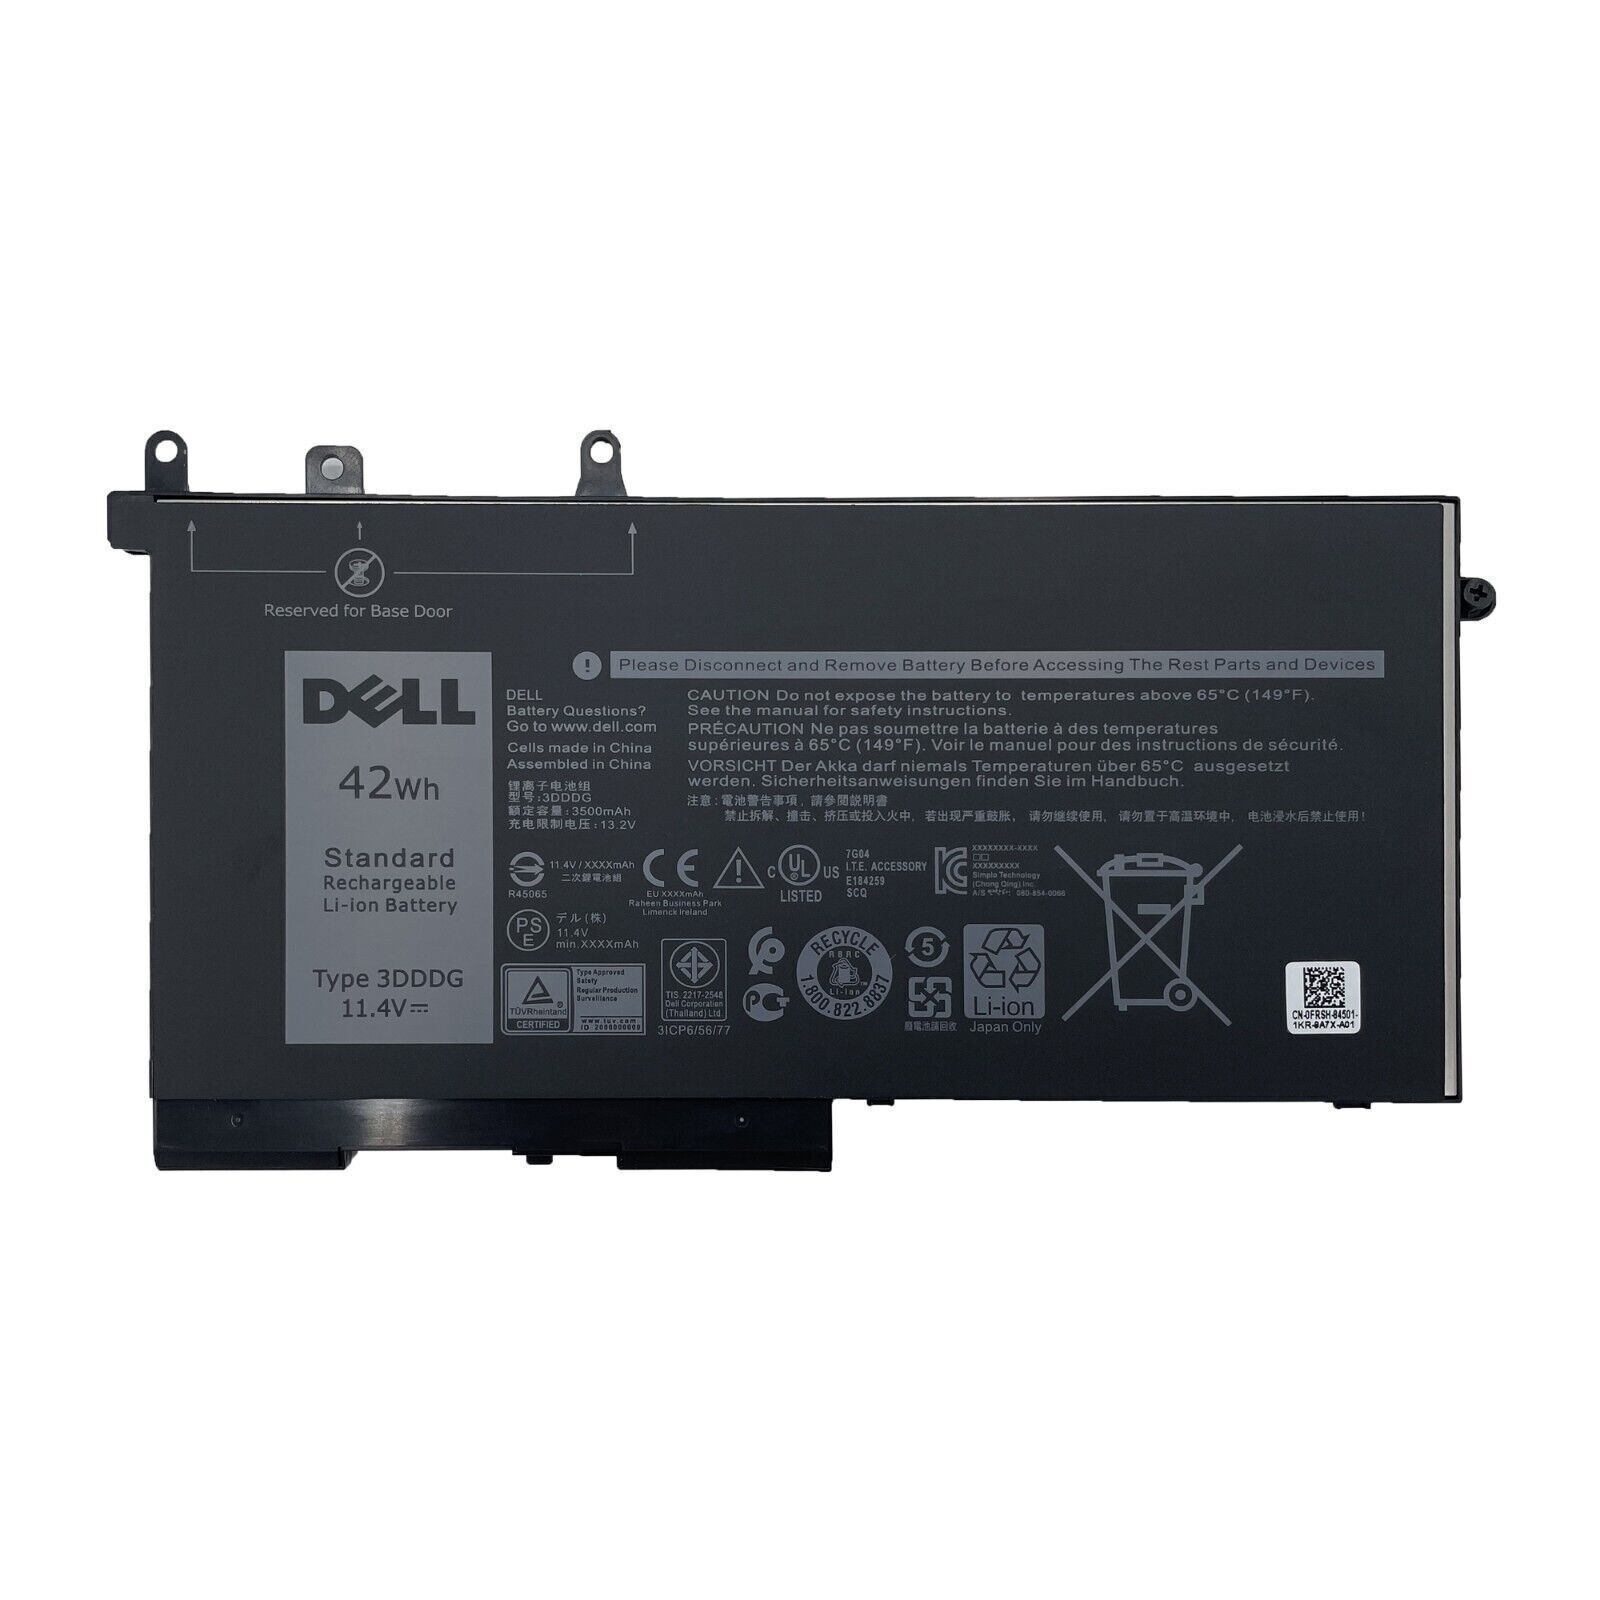 OEM Genuine 42Wh 3DDDG Battery For Dell Latitude 5280 5480 5580 5290 5490 5590